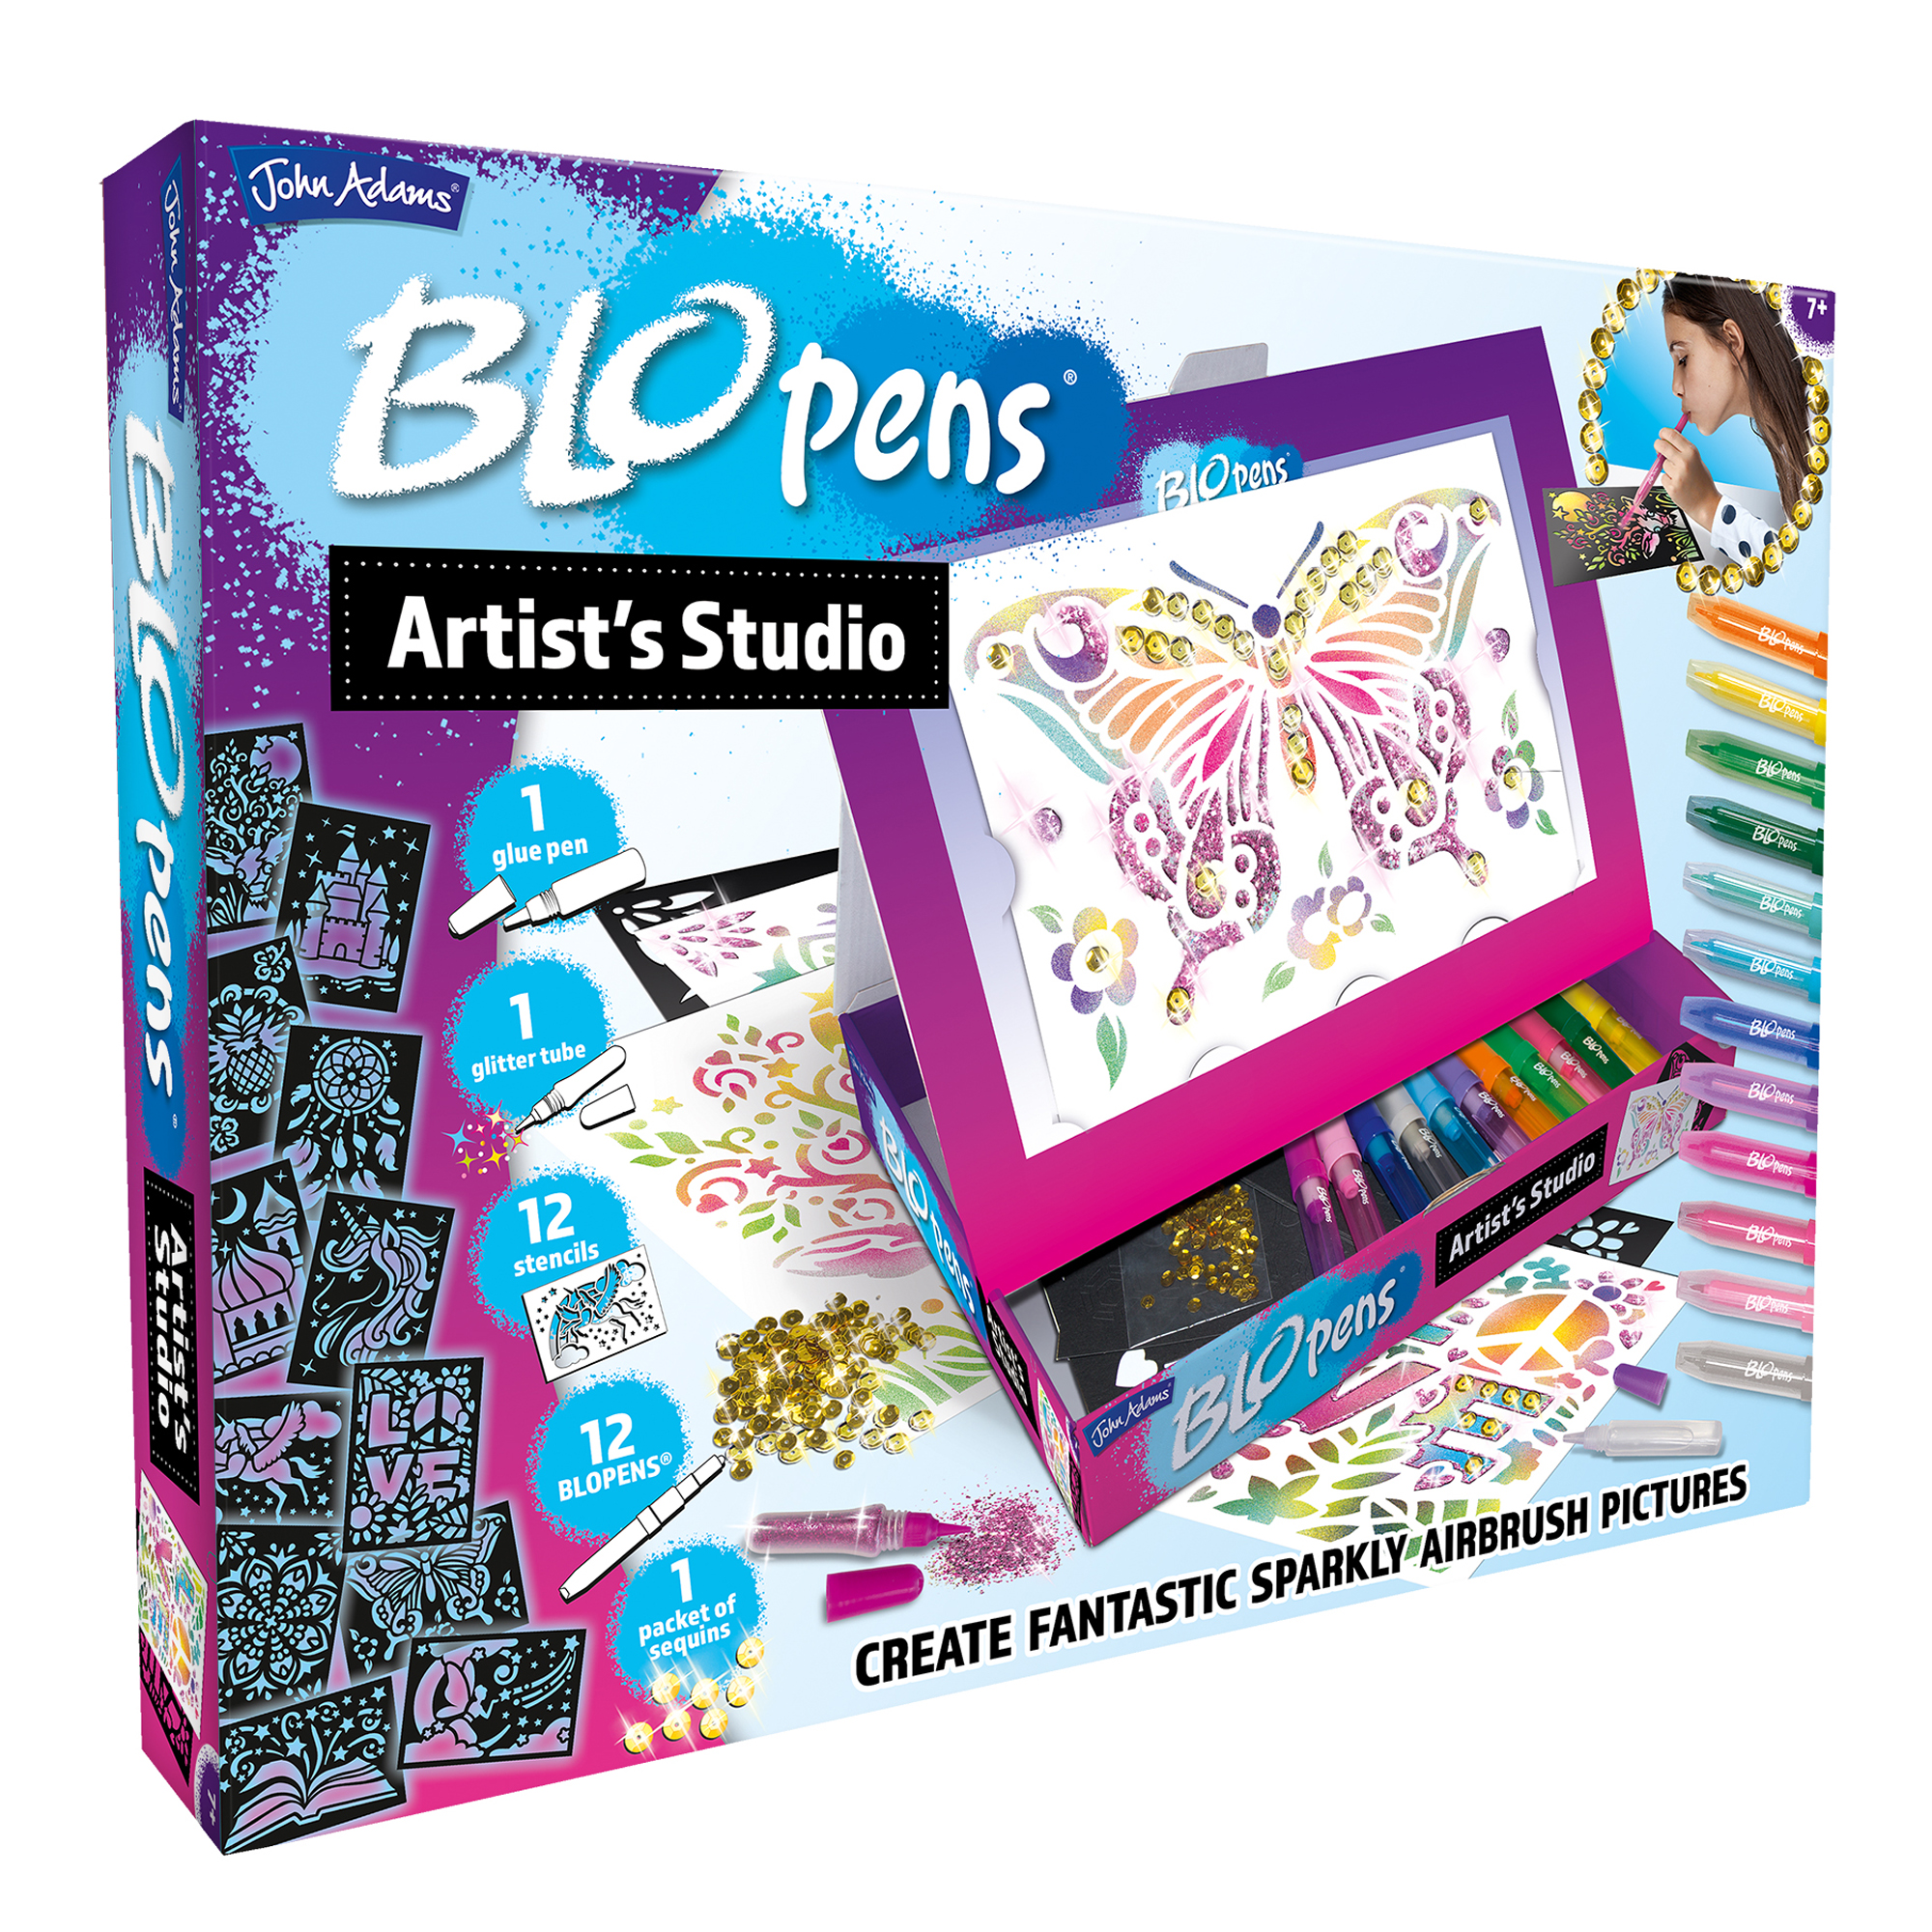 BLOPENS Artist's Studio - John Adams